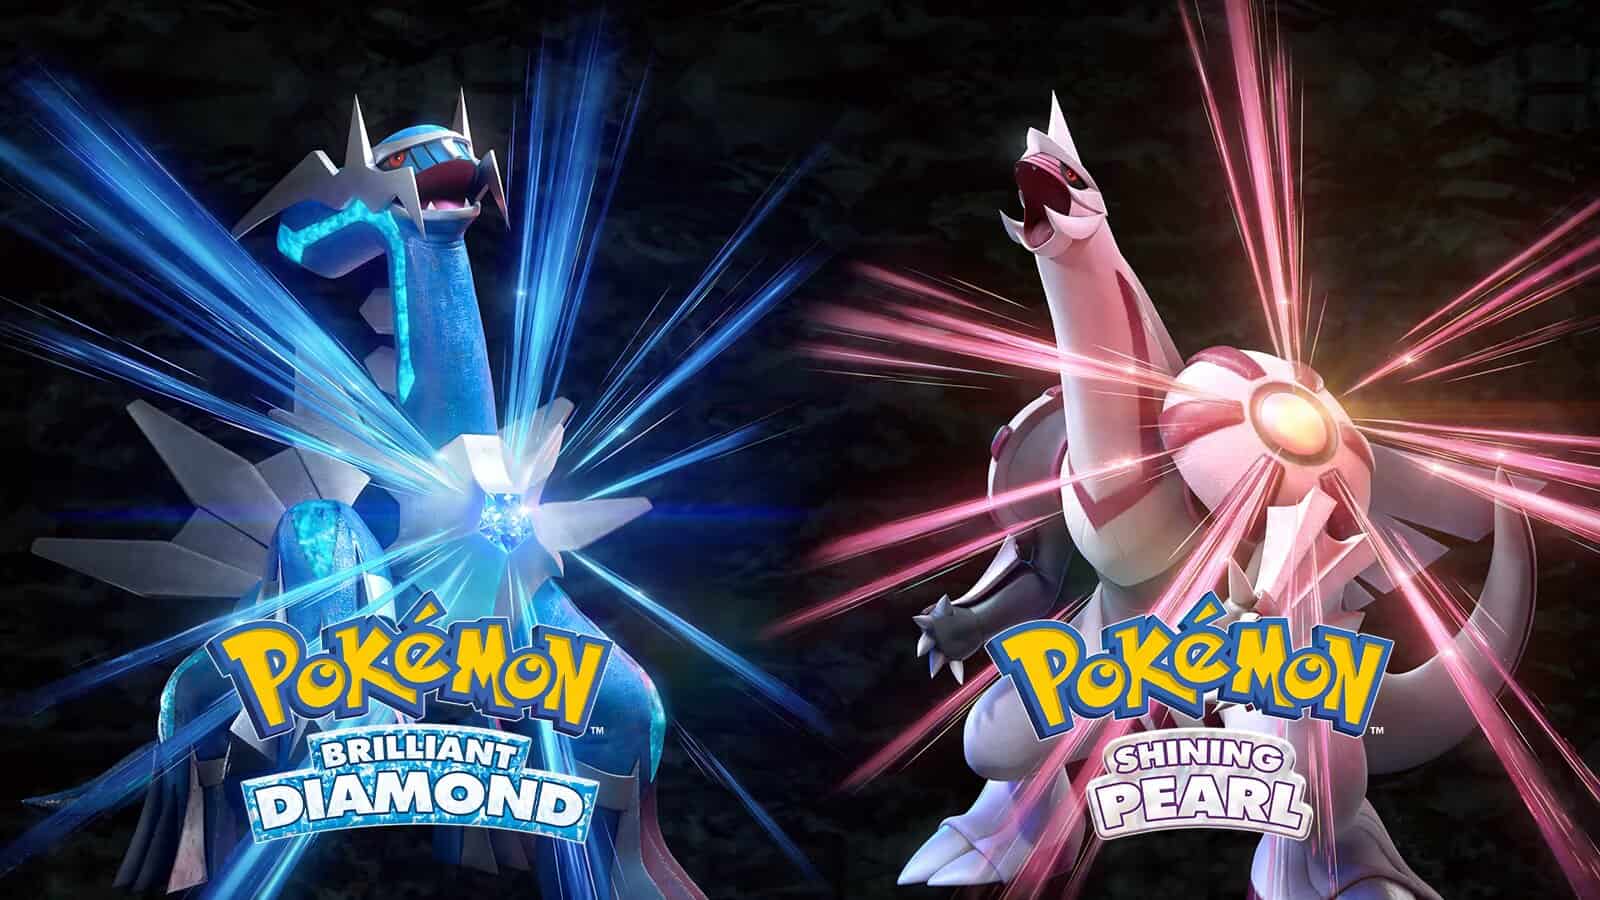 Pokémon Brilliant Diamond review: Almost too faithful of a remake